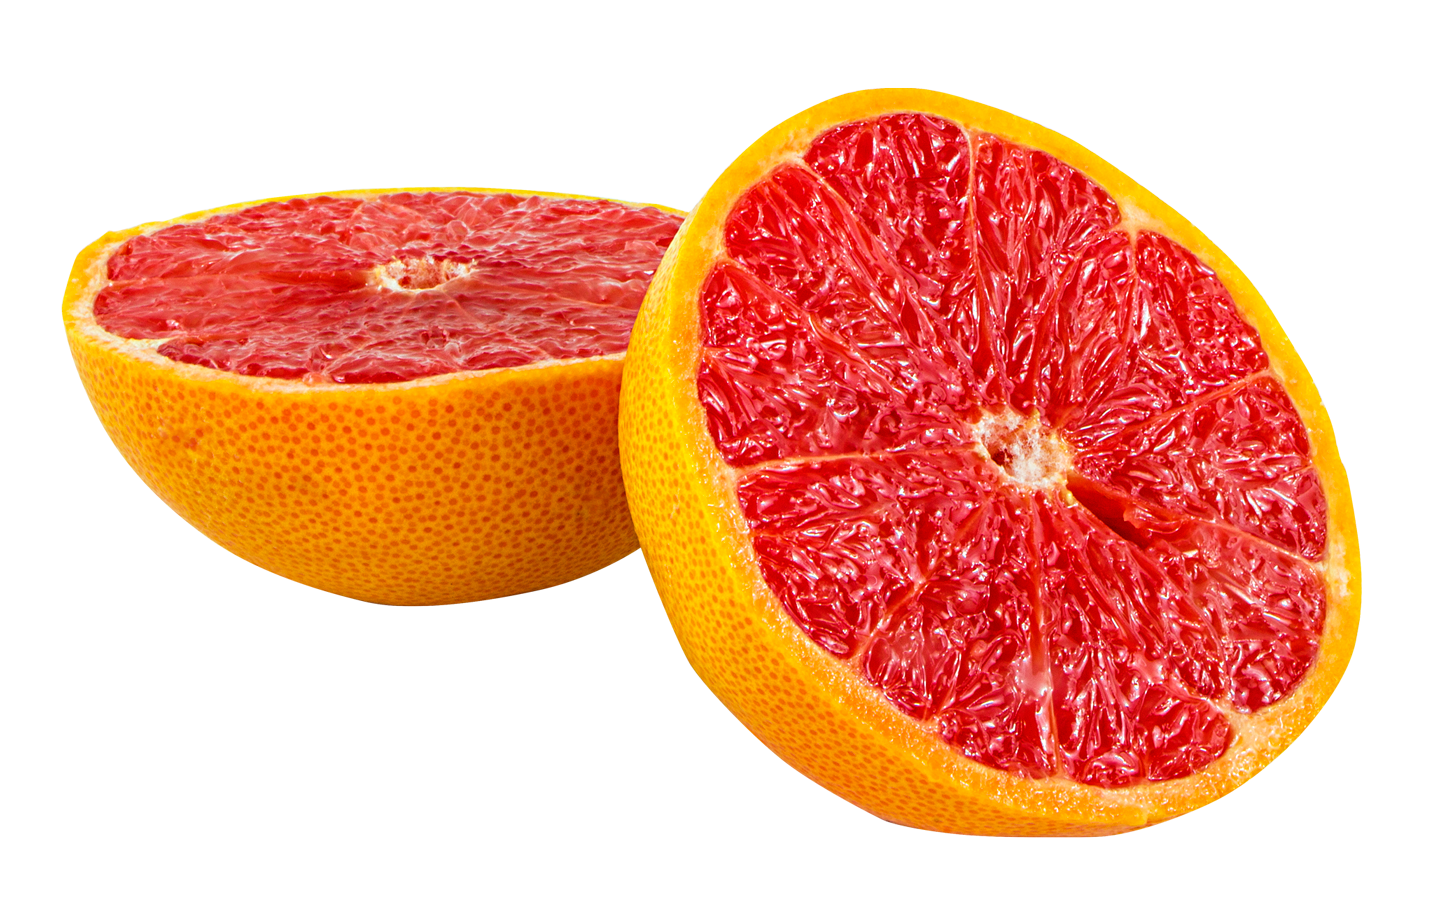 Grapefruit PNG image #5 PlusP